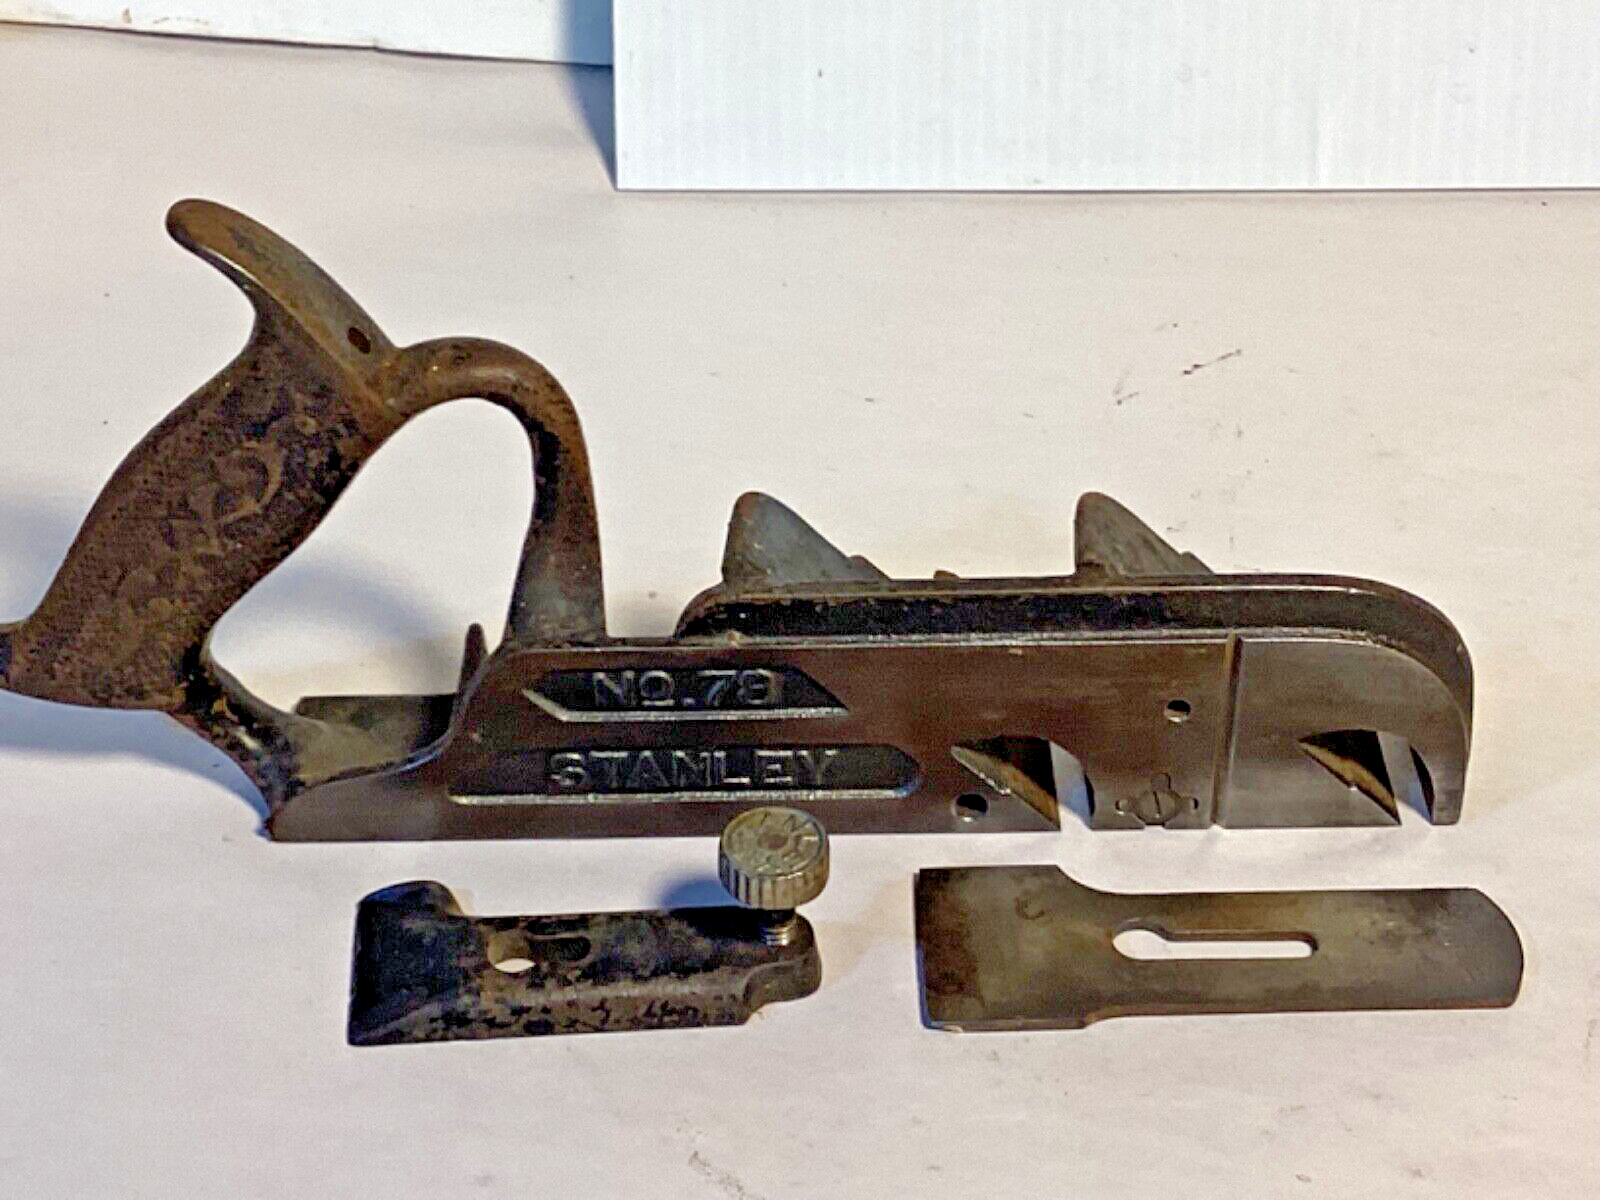 Vintage Stanley #78 Rabbit Plane carpenter hand tool parts/restore